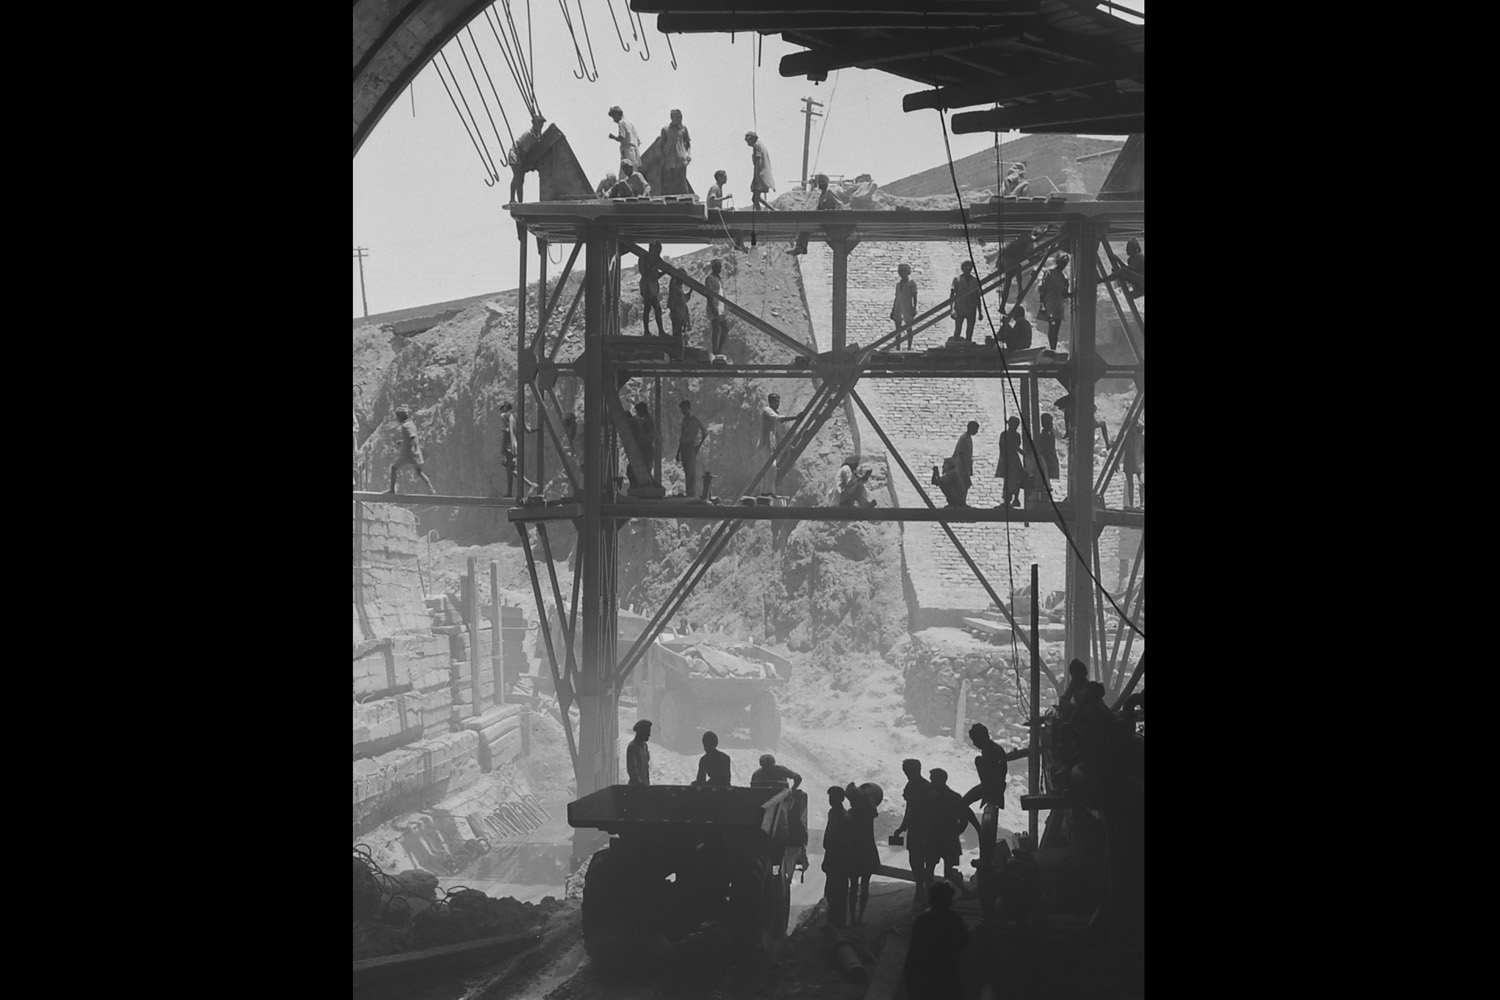 Bhakra Dam tunnel interior under construction, India, 1952.